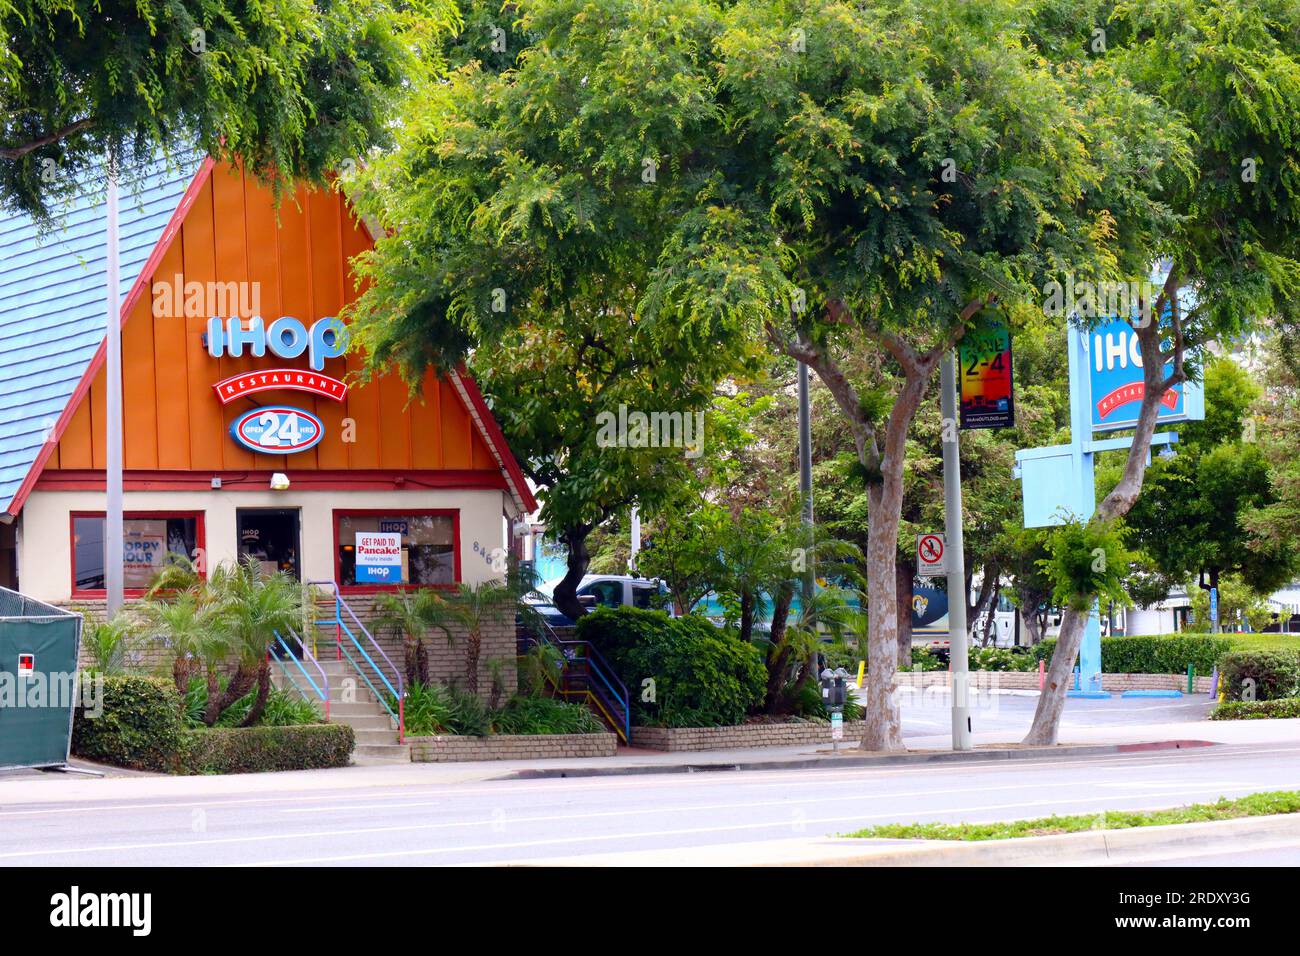 IHOP® Restaurant Locations  Breakfast, Lunch & Dinner - Pancakes 24/7